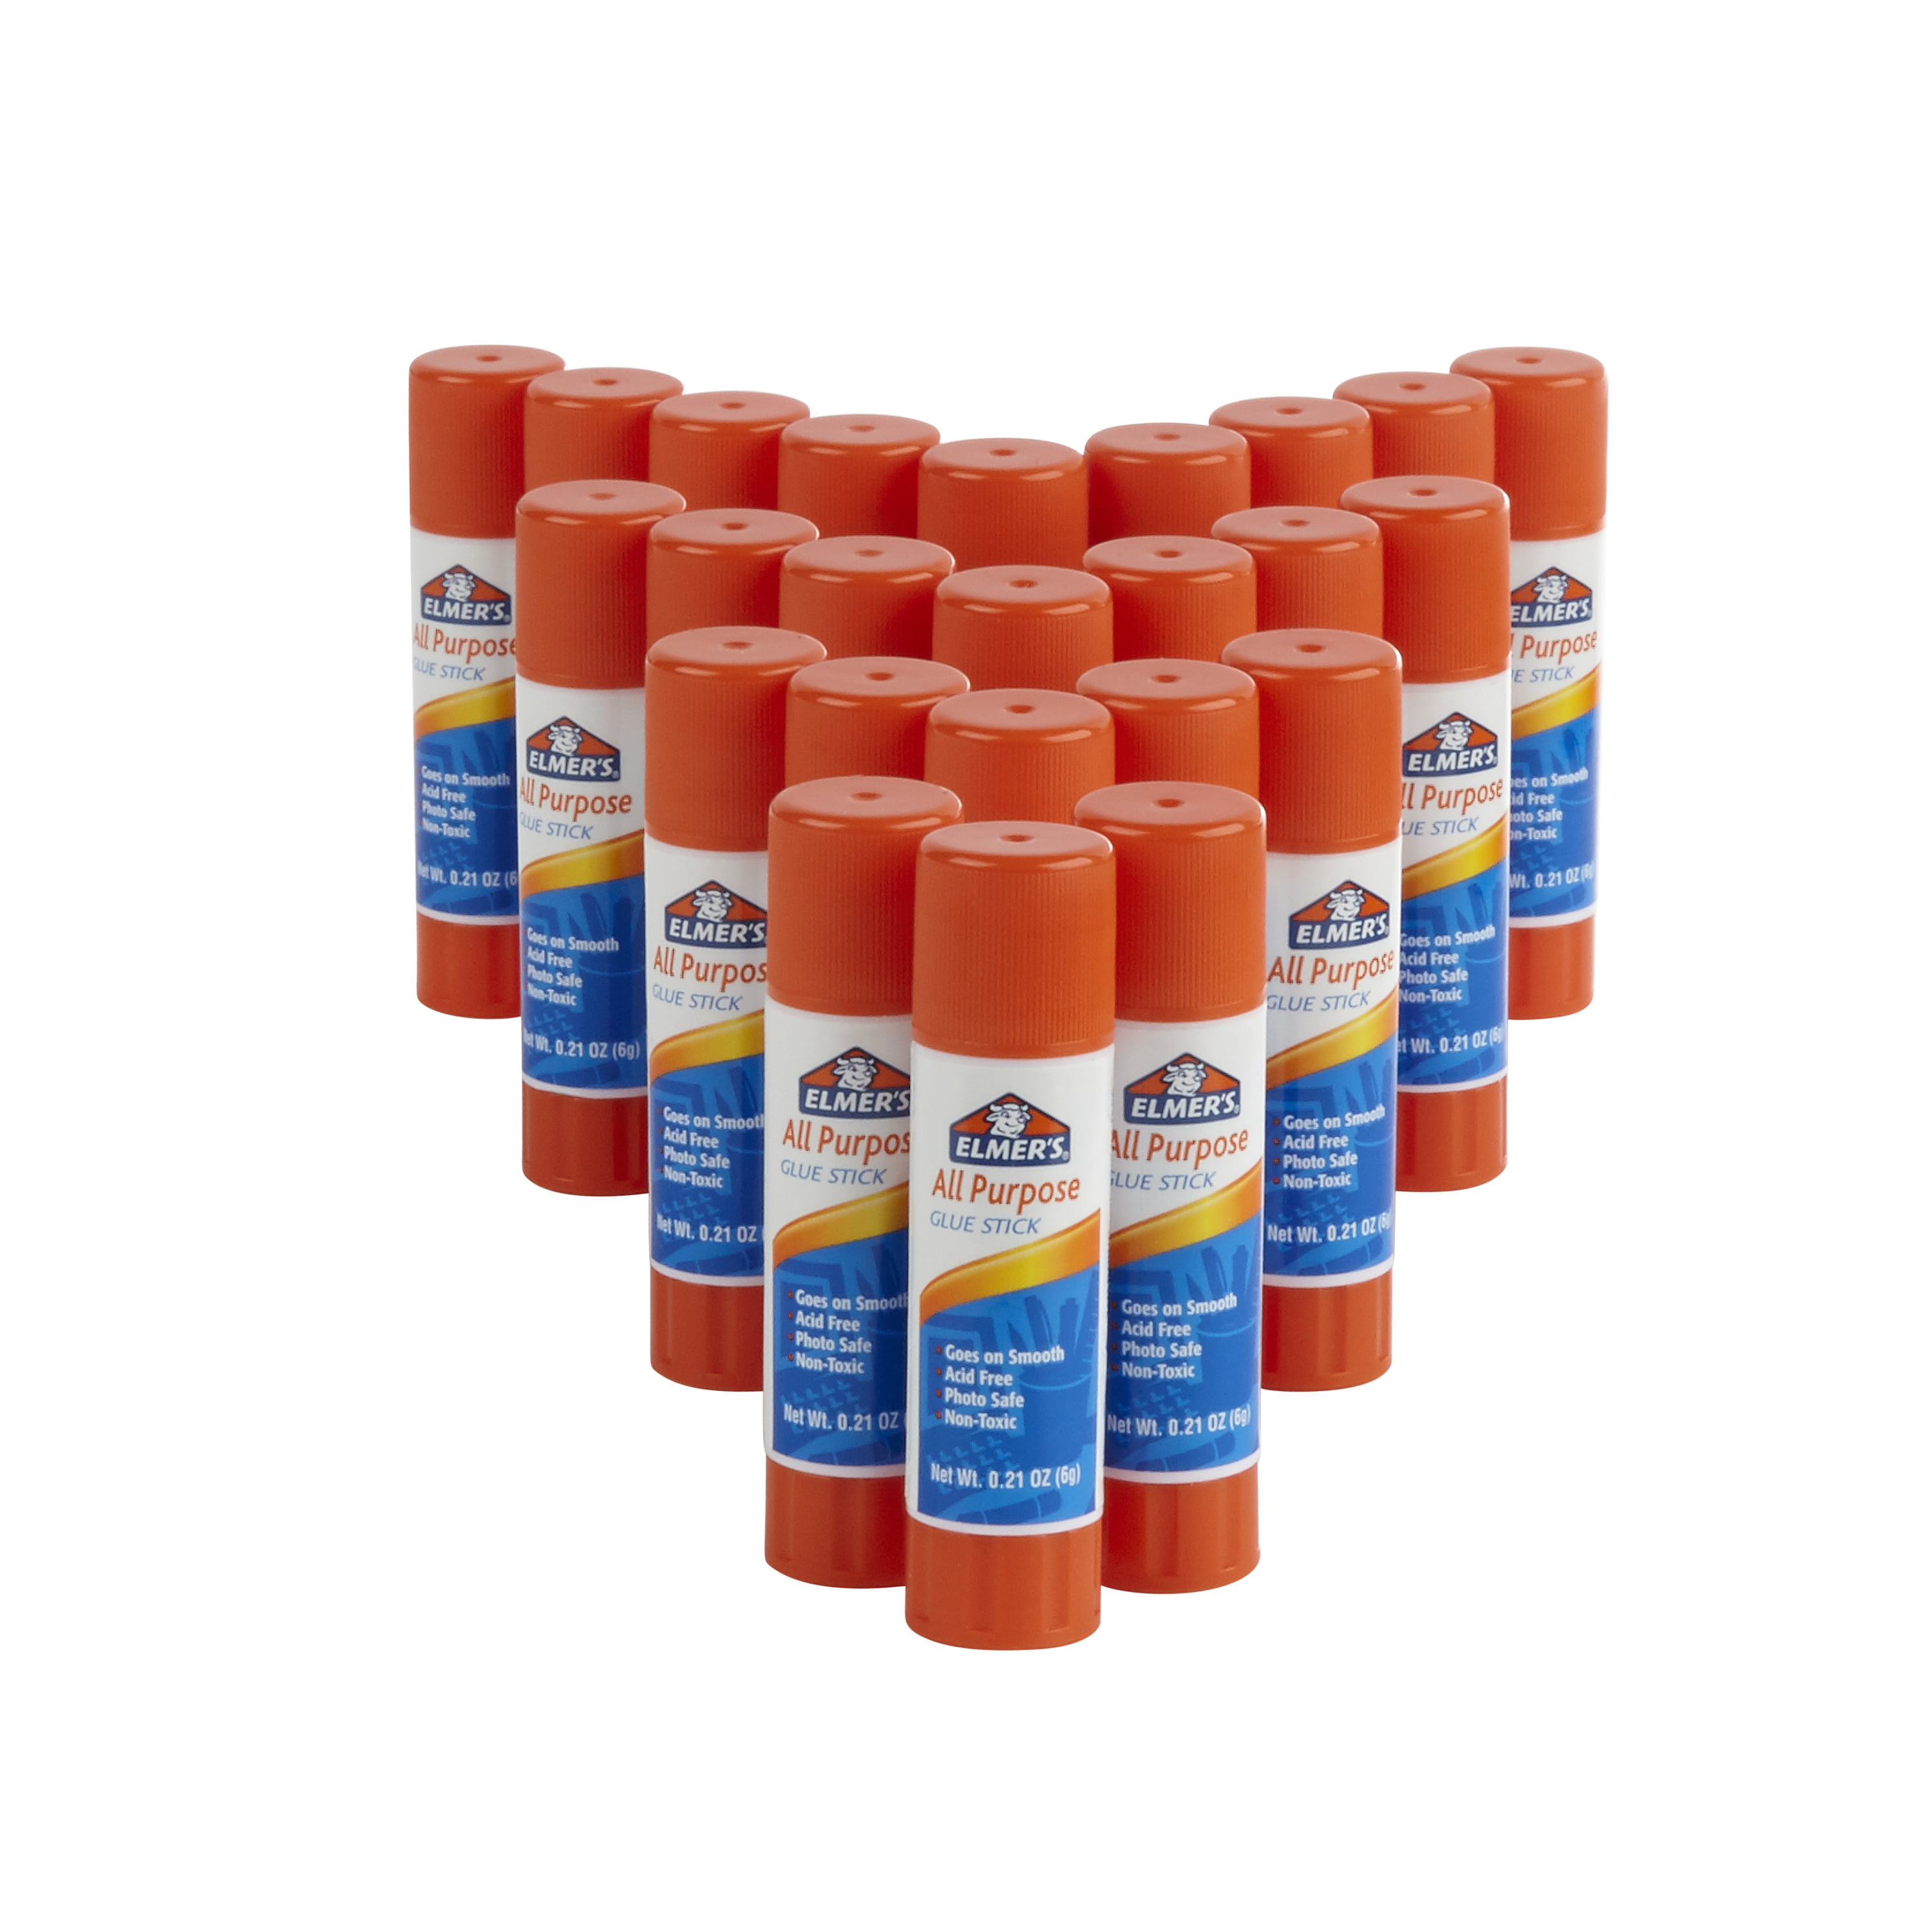 "Elmer's Washable All-Purpose School Glue Sticks 60-Pack " for sale online E501 0.24 Ounce Each 